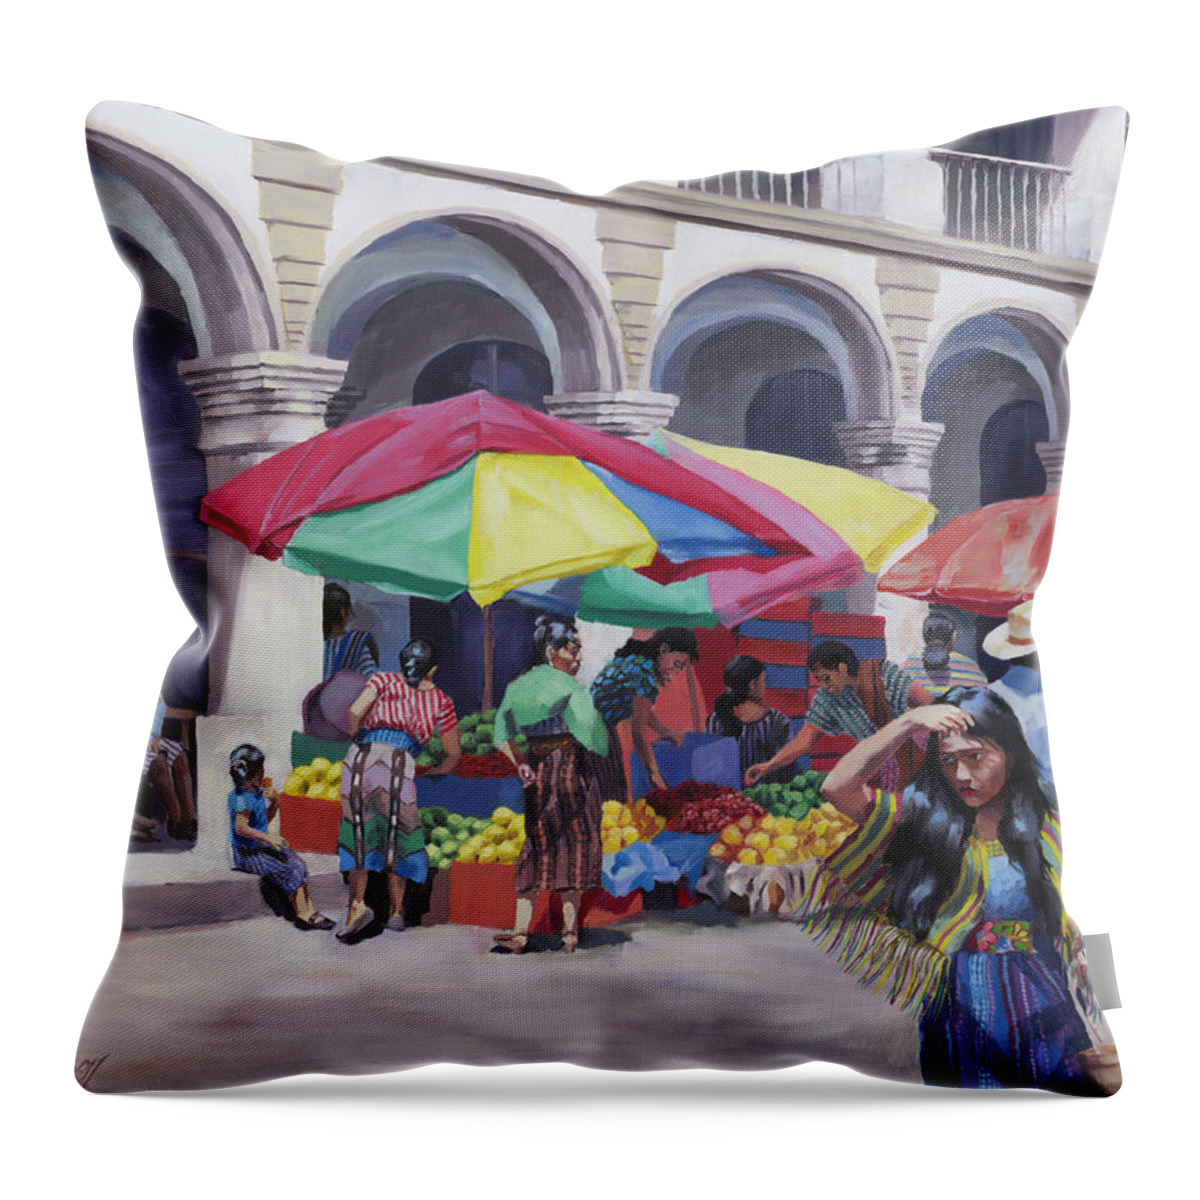 Market Throw Pillow featuring the painting Aititlan Market by Jordan Henderson